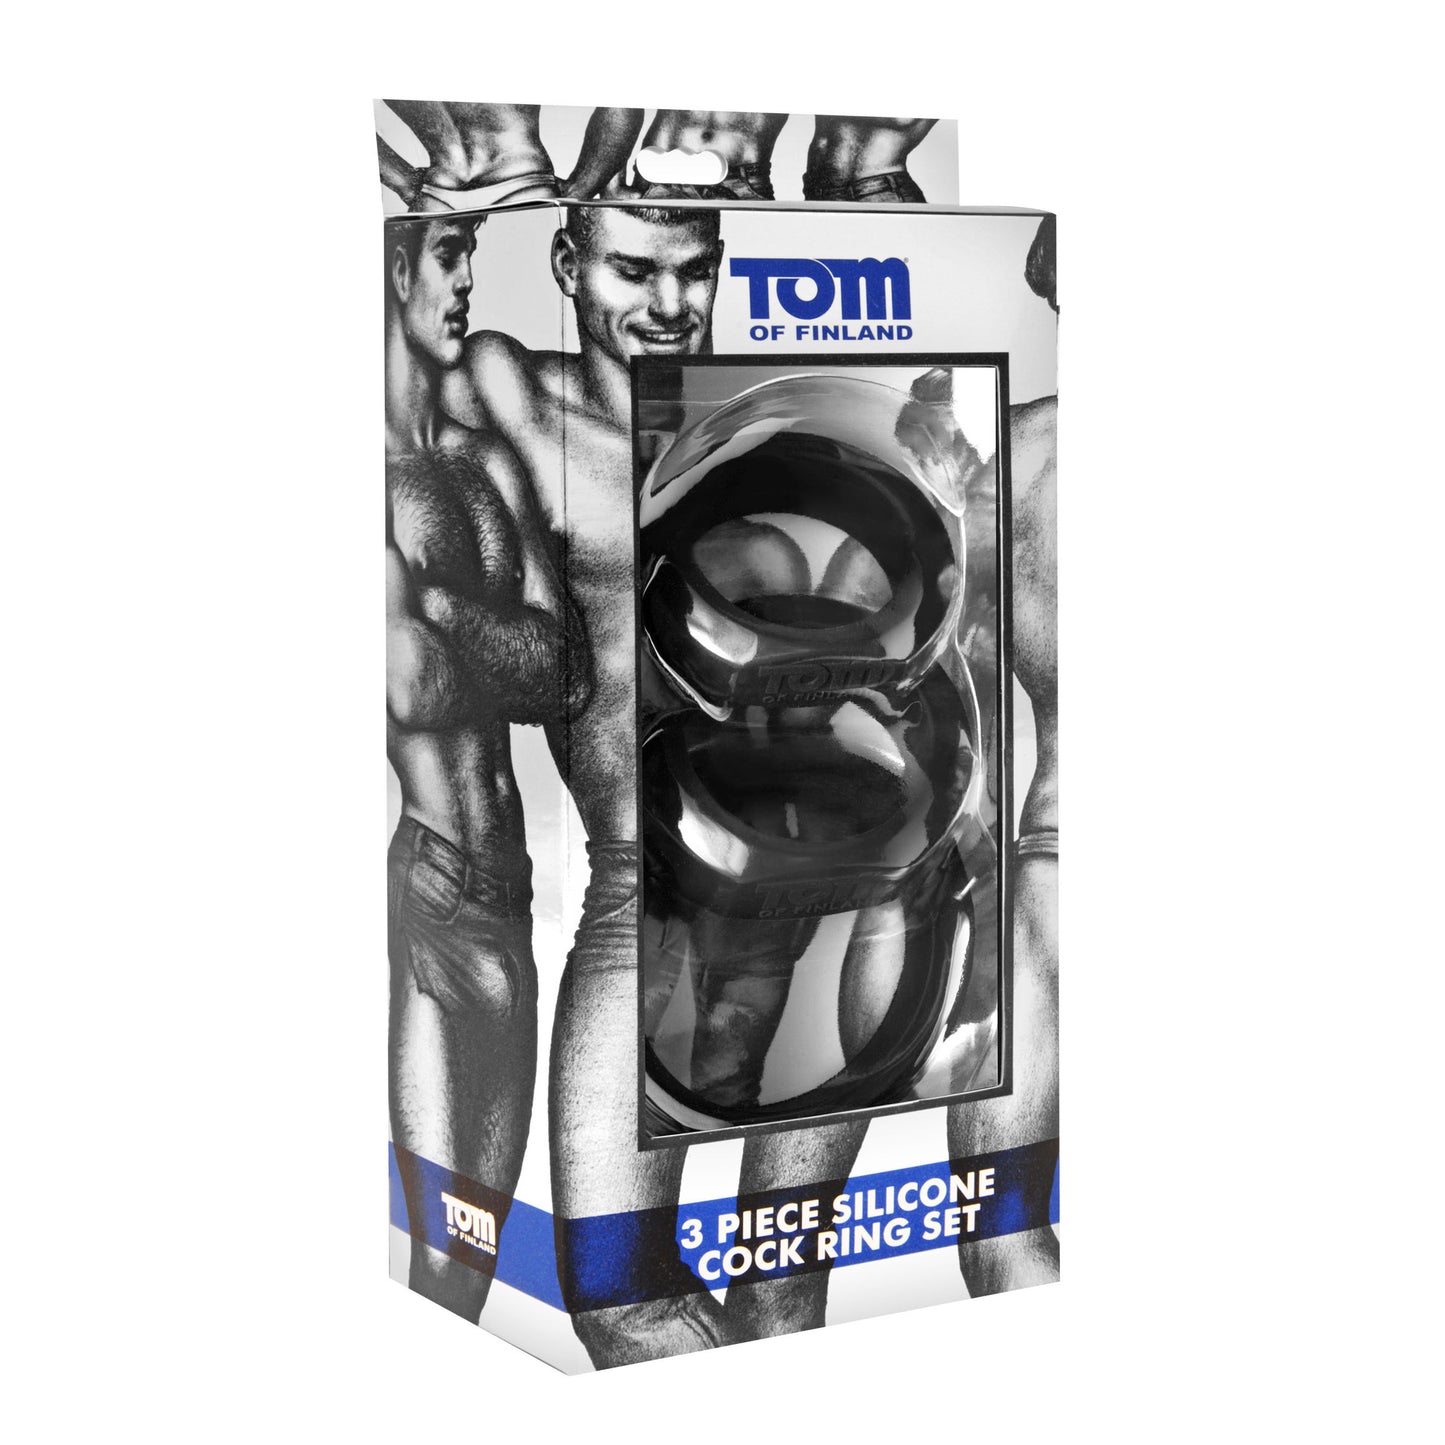 Tom of Finland 3 Piece Silicone Cock Ring Set - Black - UABDSM